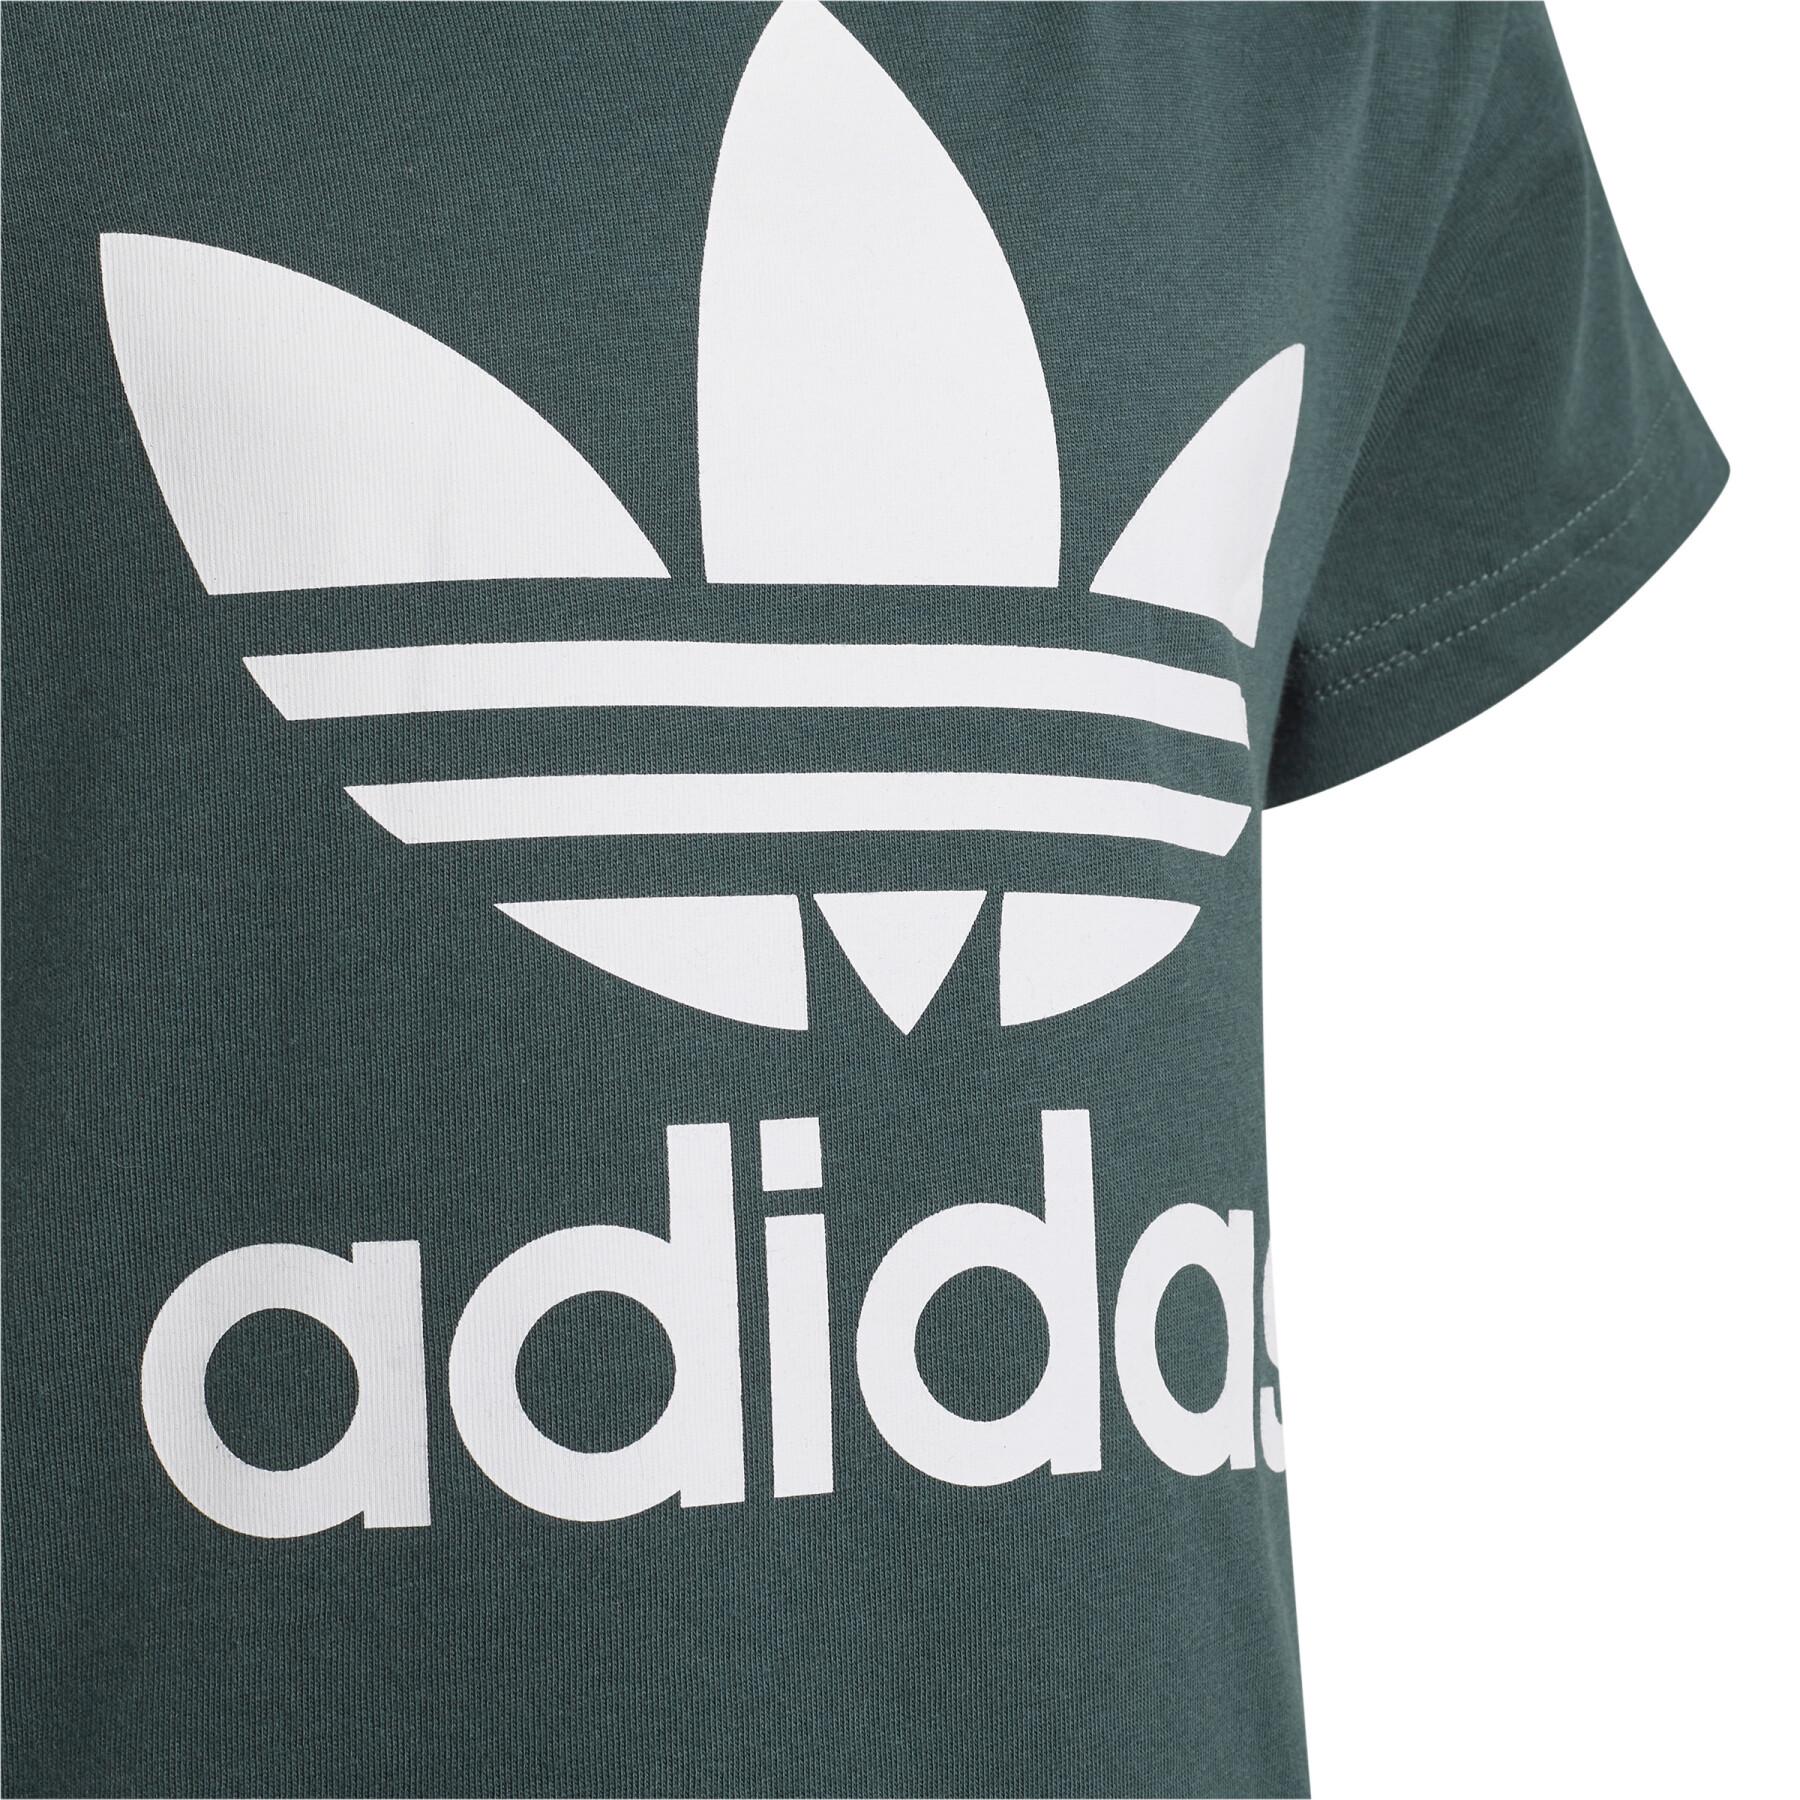 T-shirt enfant adidas Originals Trefoil Adicolor